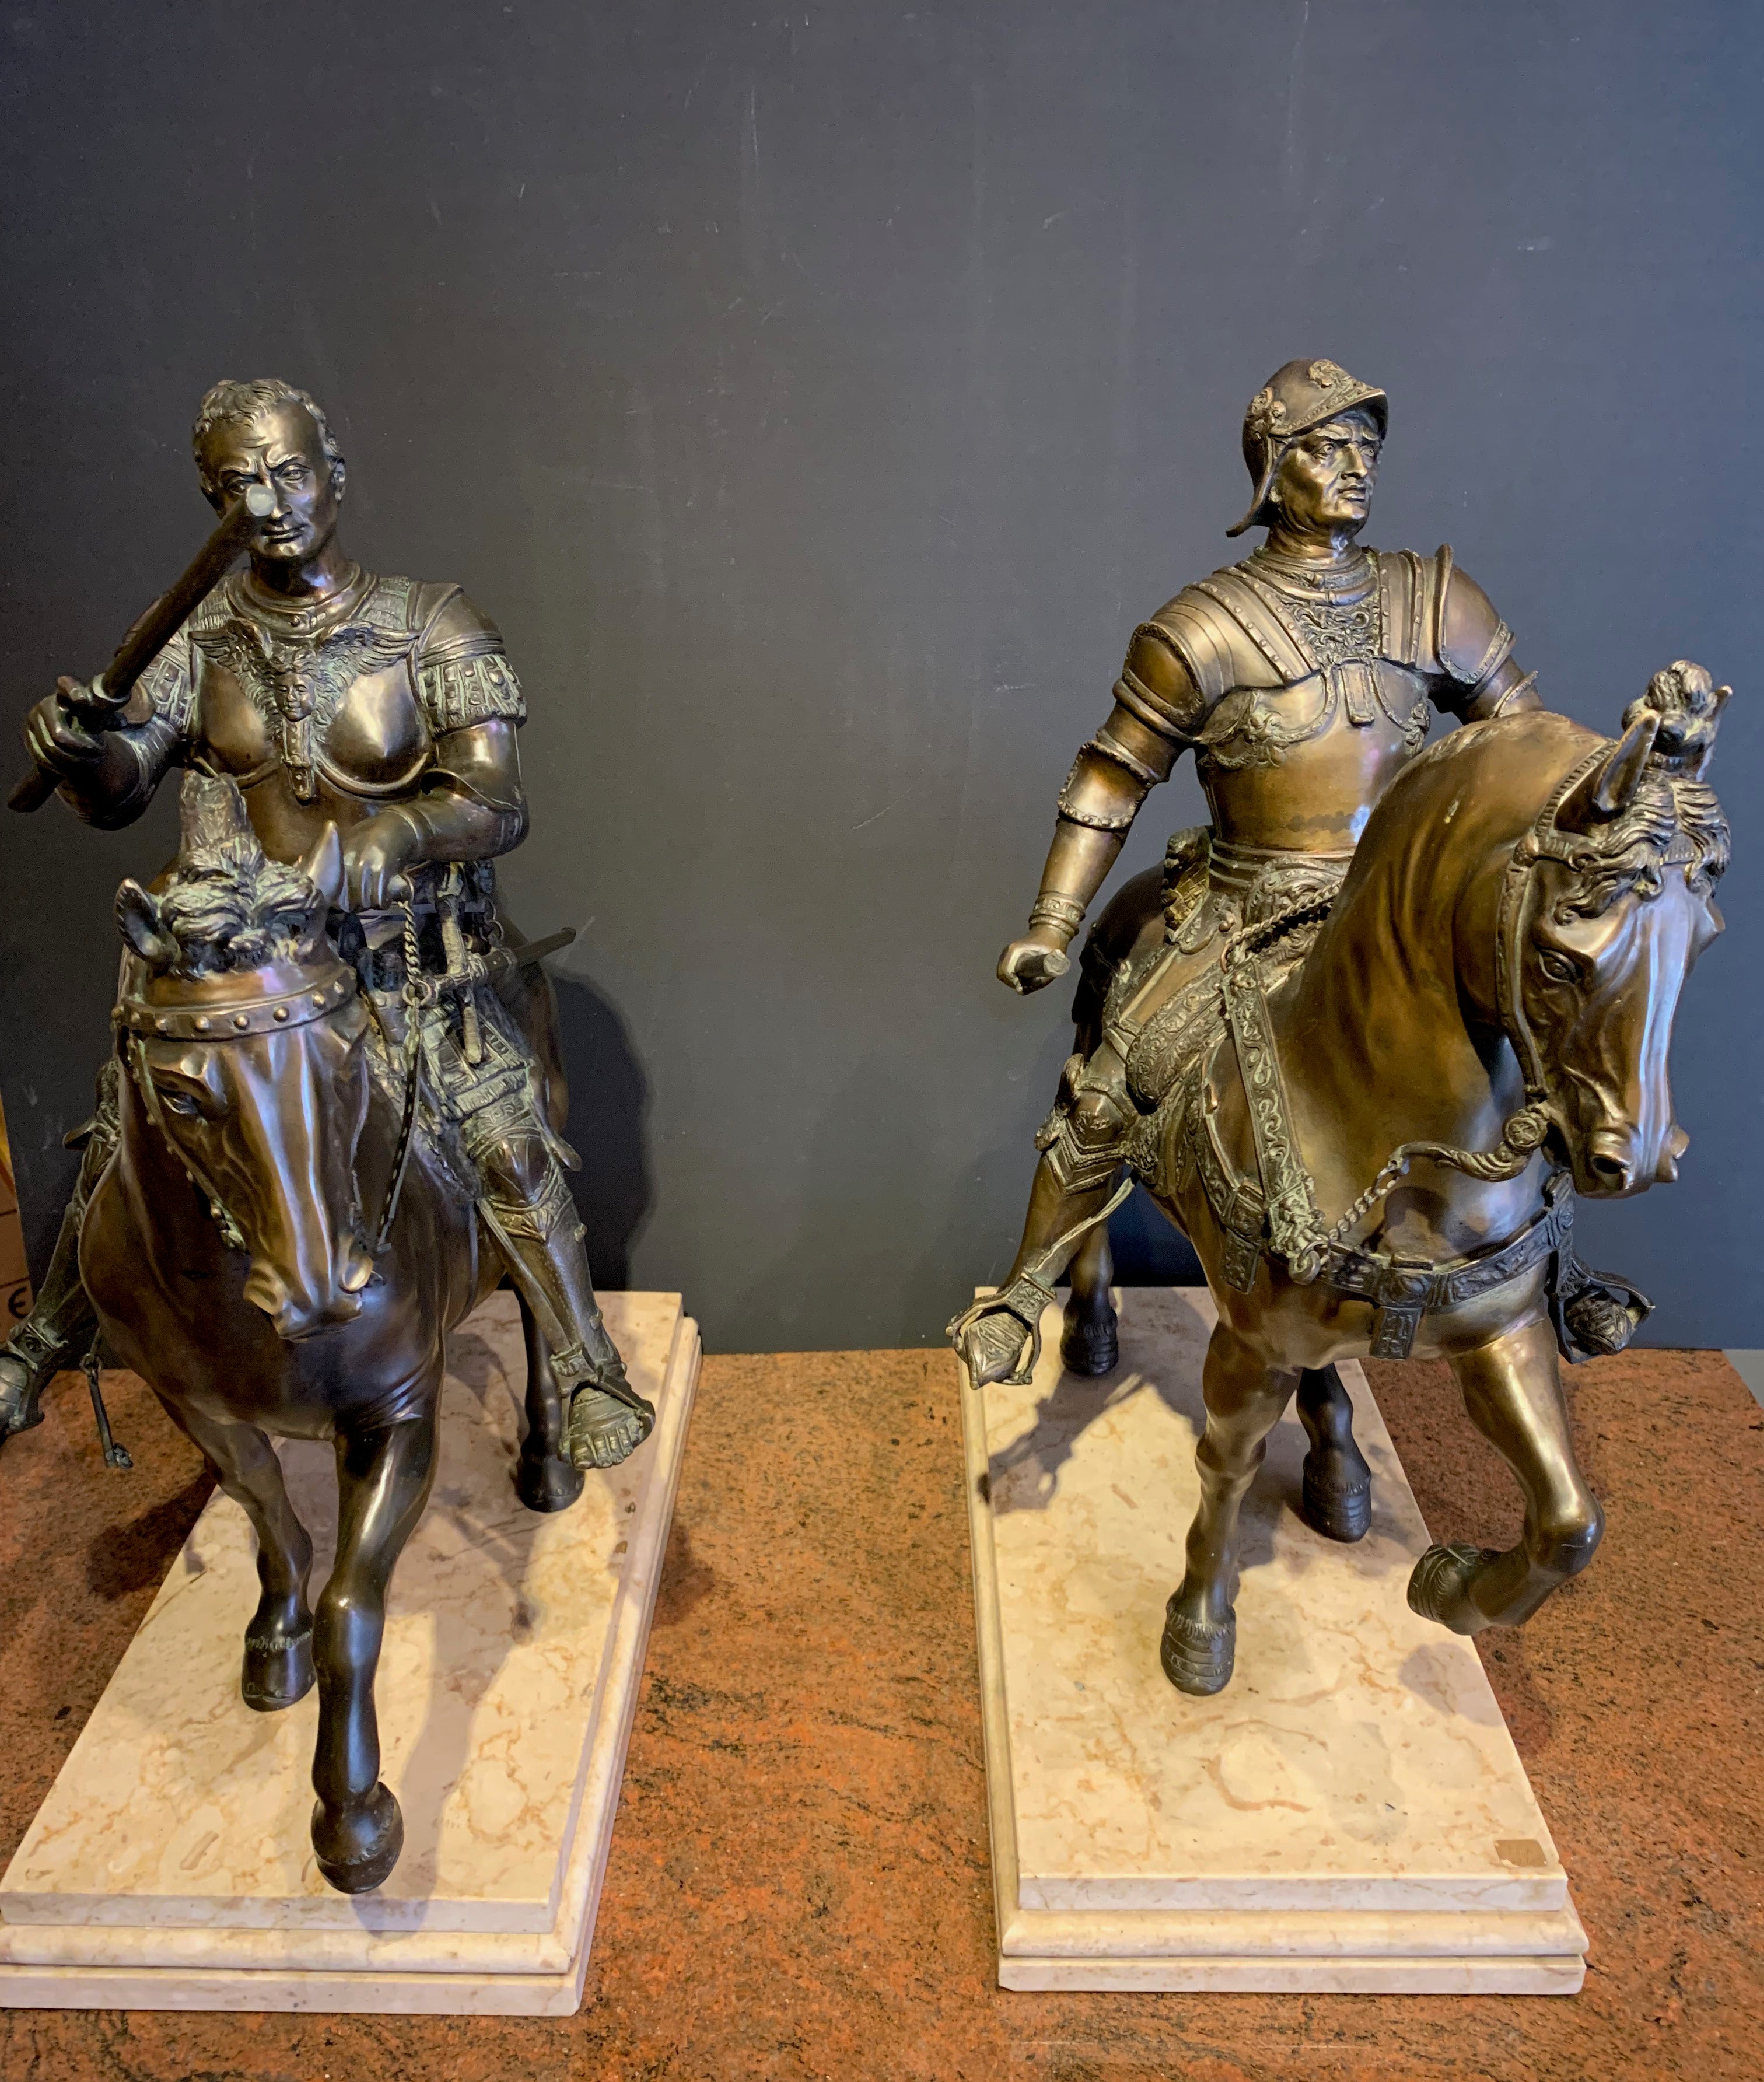 Pair of bronzes representing Venetian Condottieres, France or Italy, 19th C.